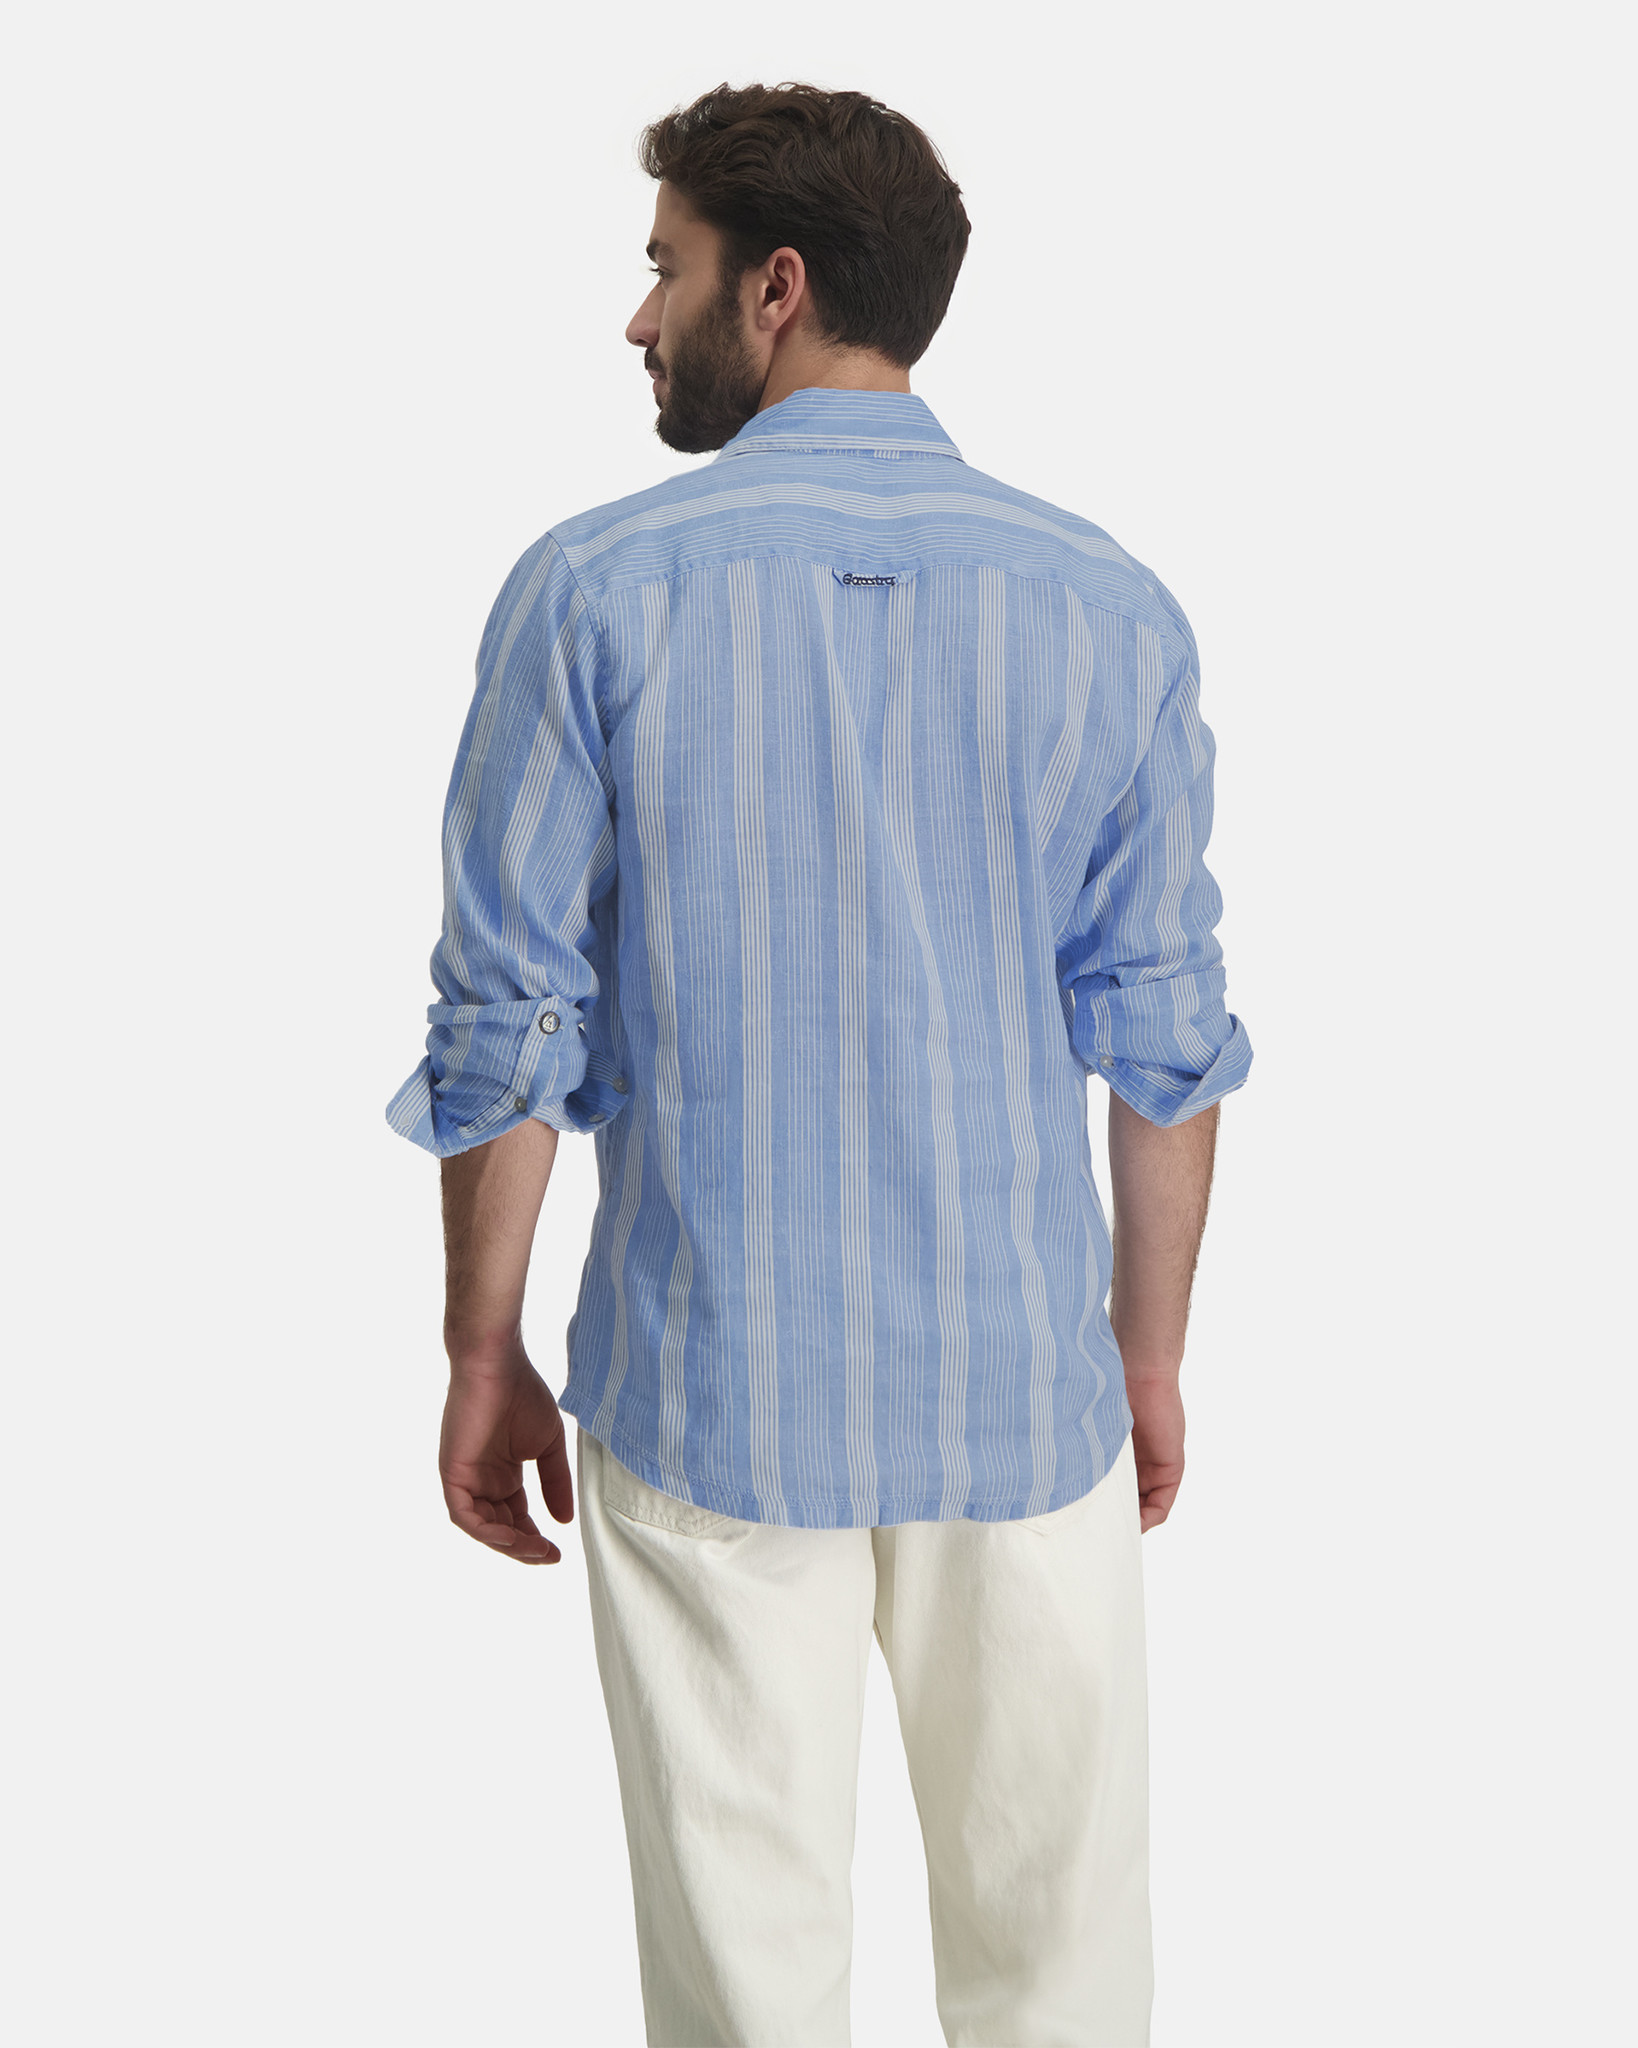 The 100% linen Faro shirt